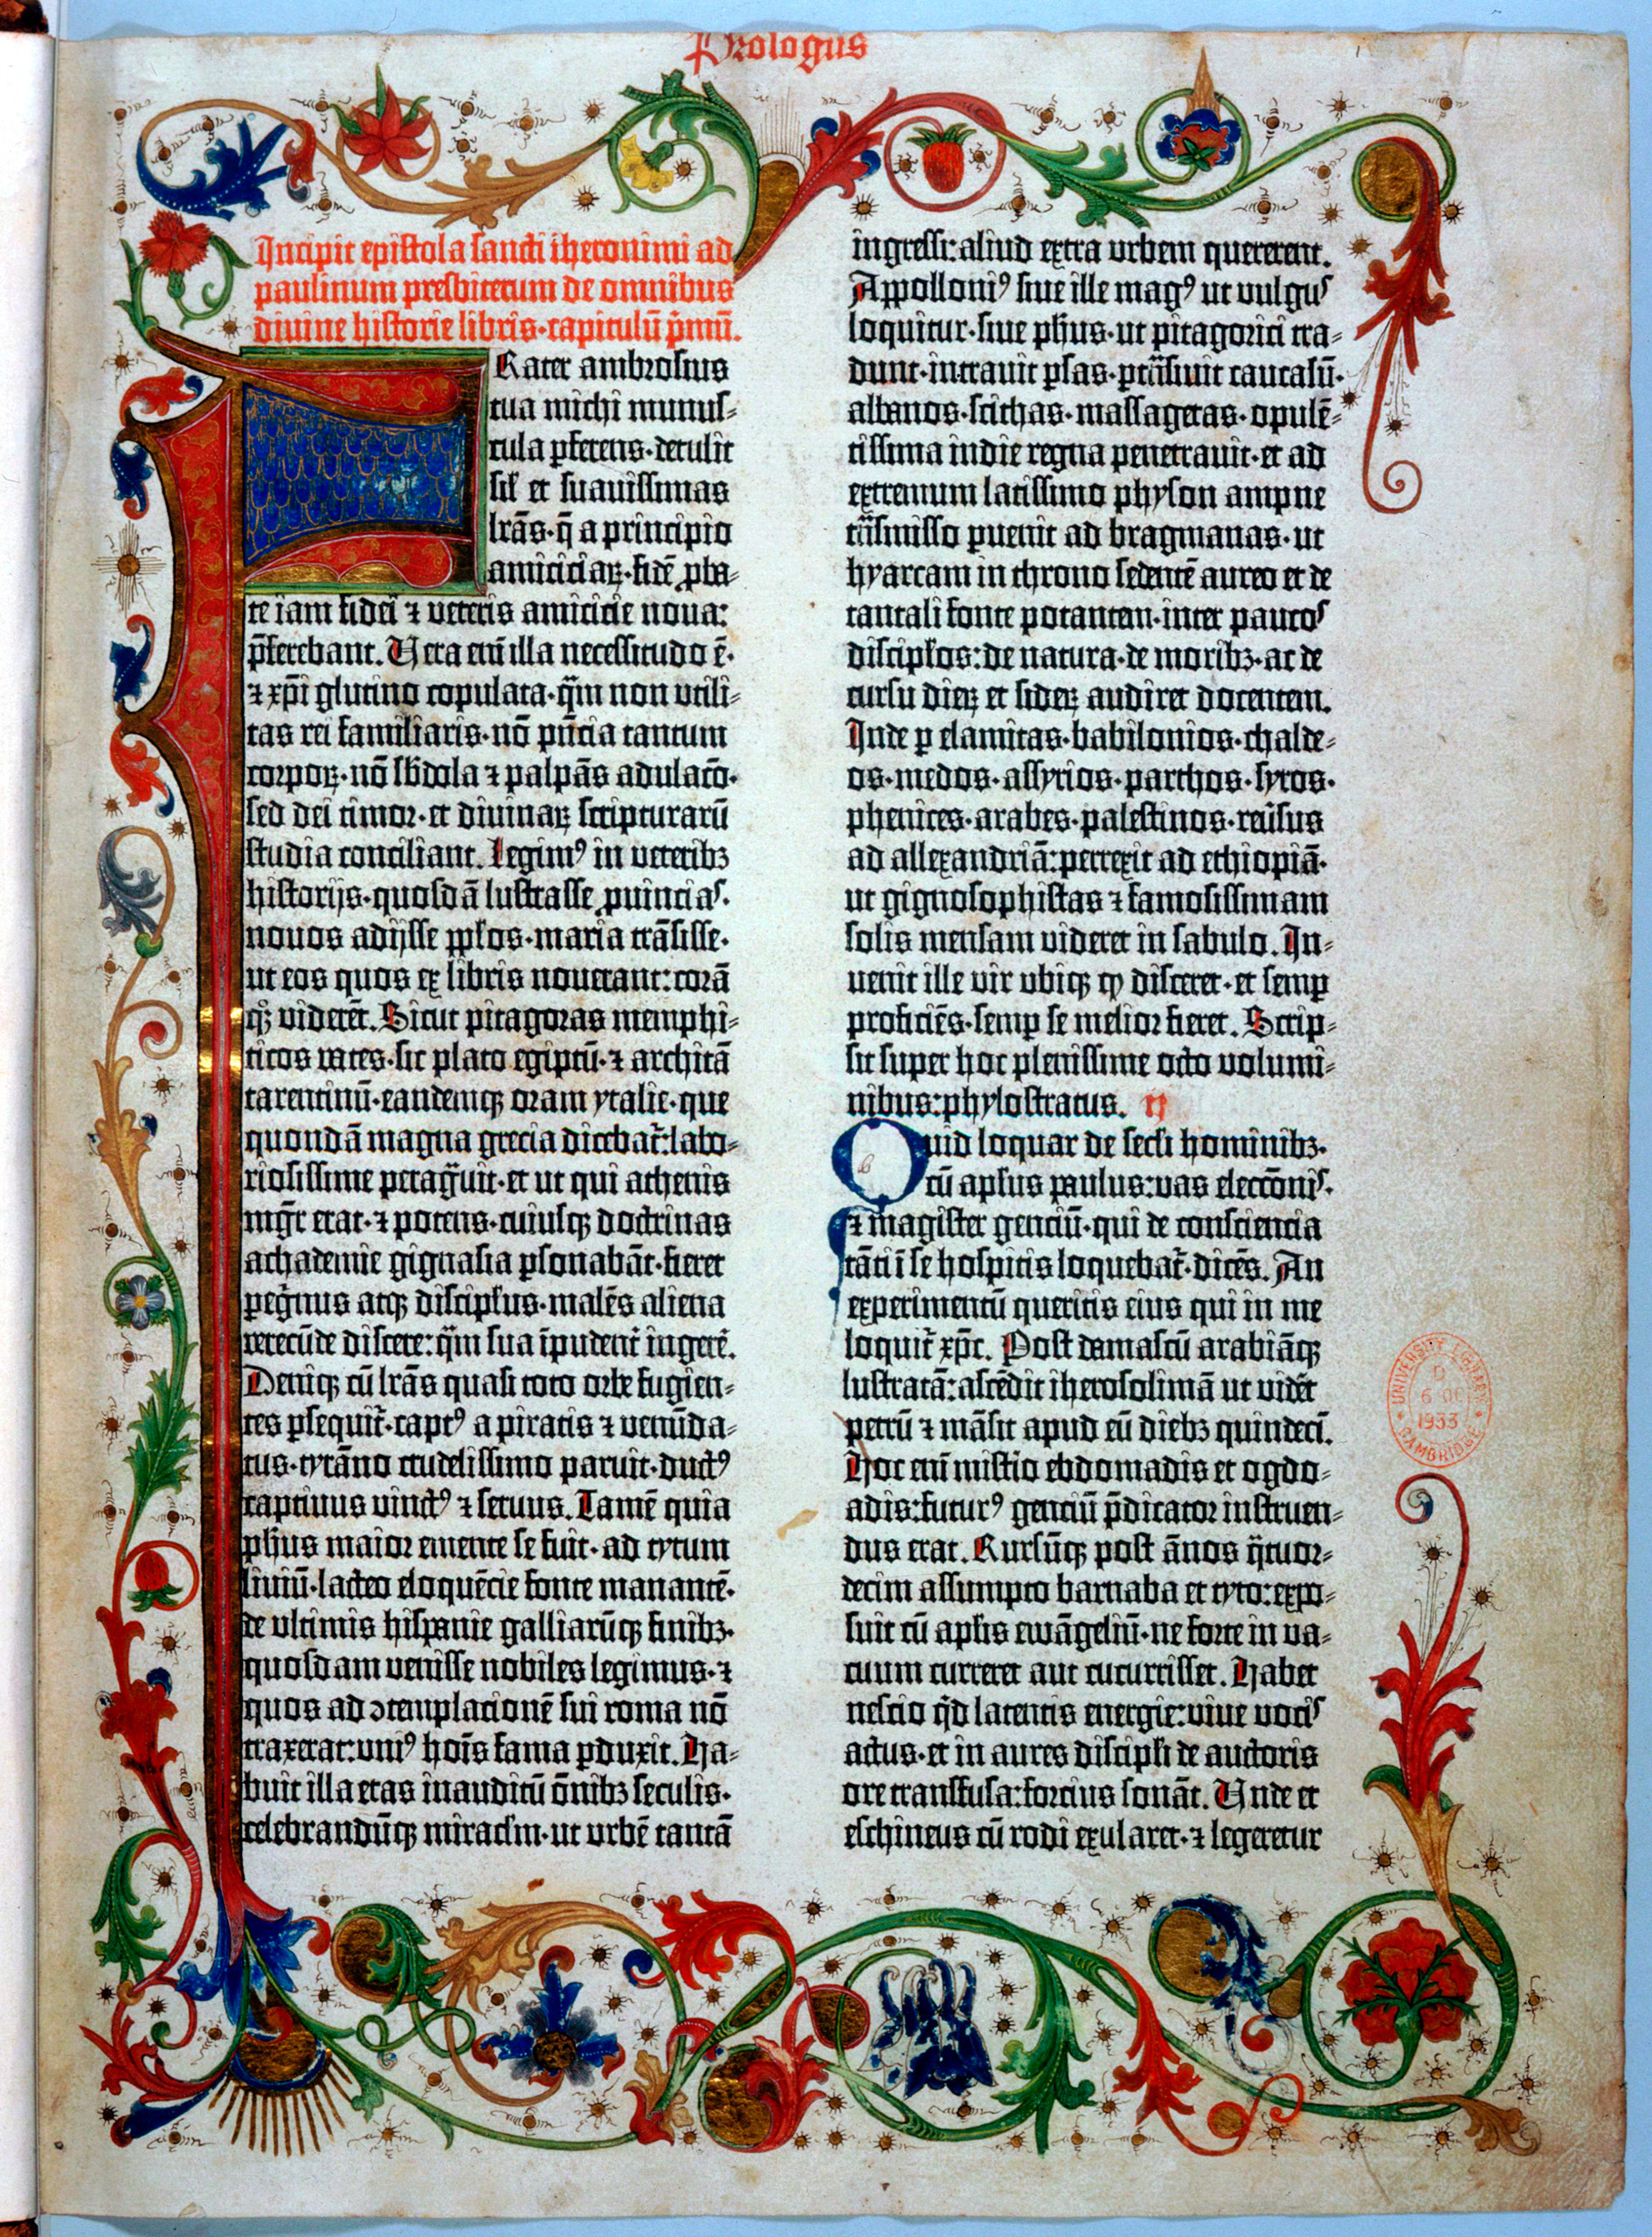 Gutenberg Bible Description, History, Facts Britannica, 47% OFF